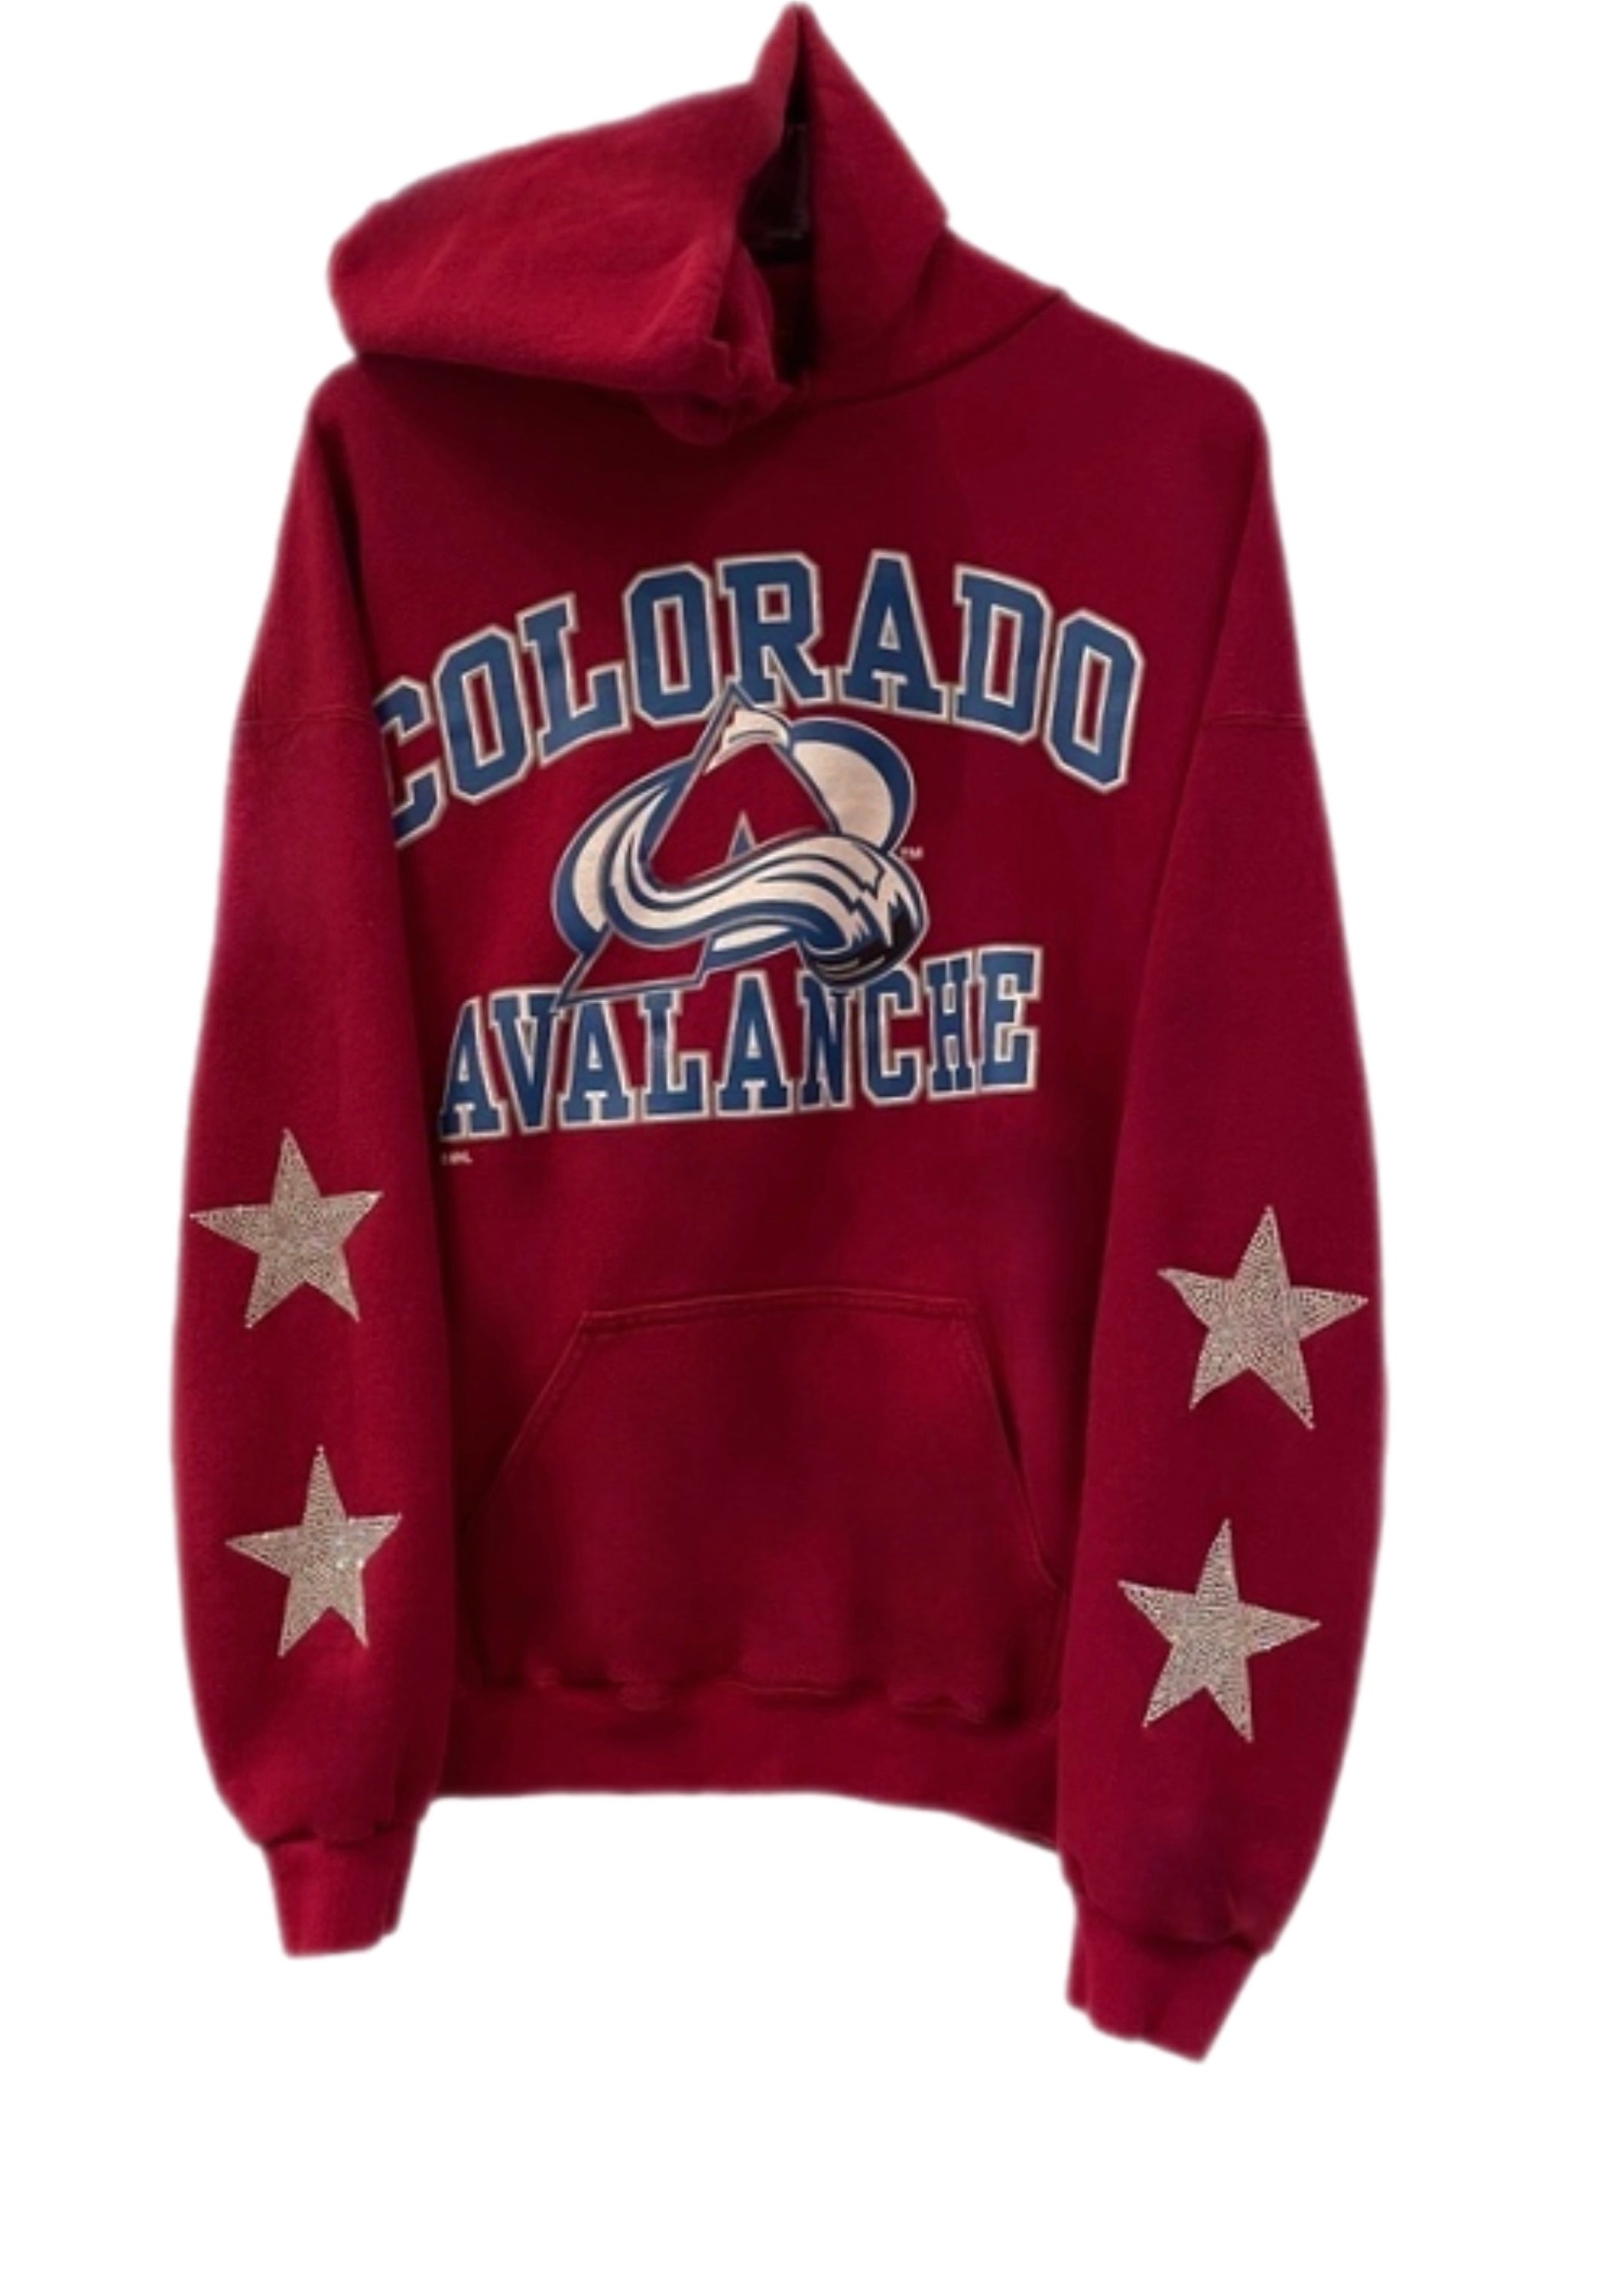 Avalanche Can Do It - Sweatshirt